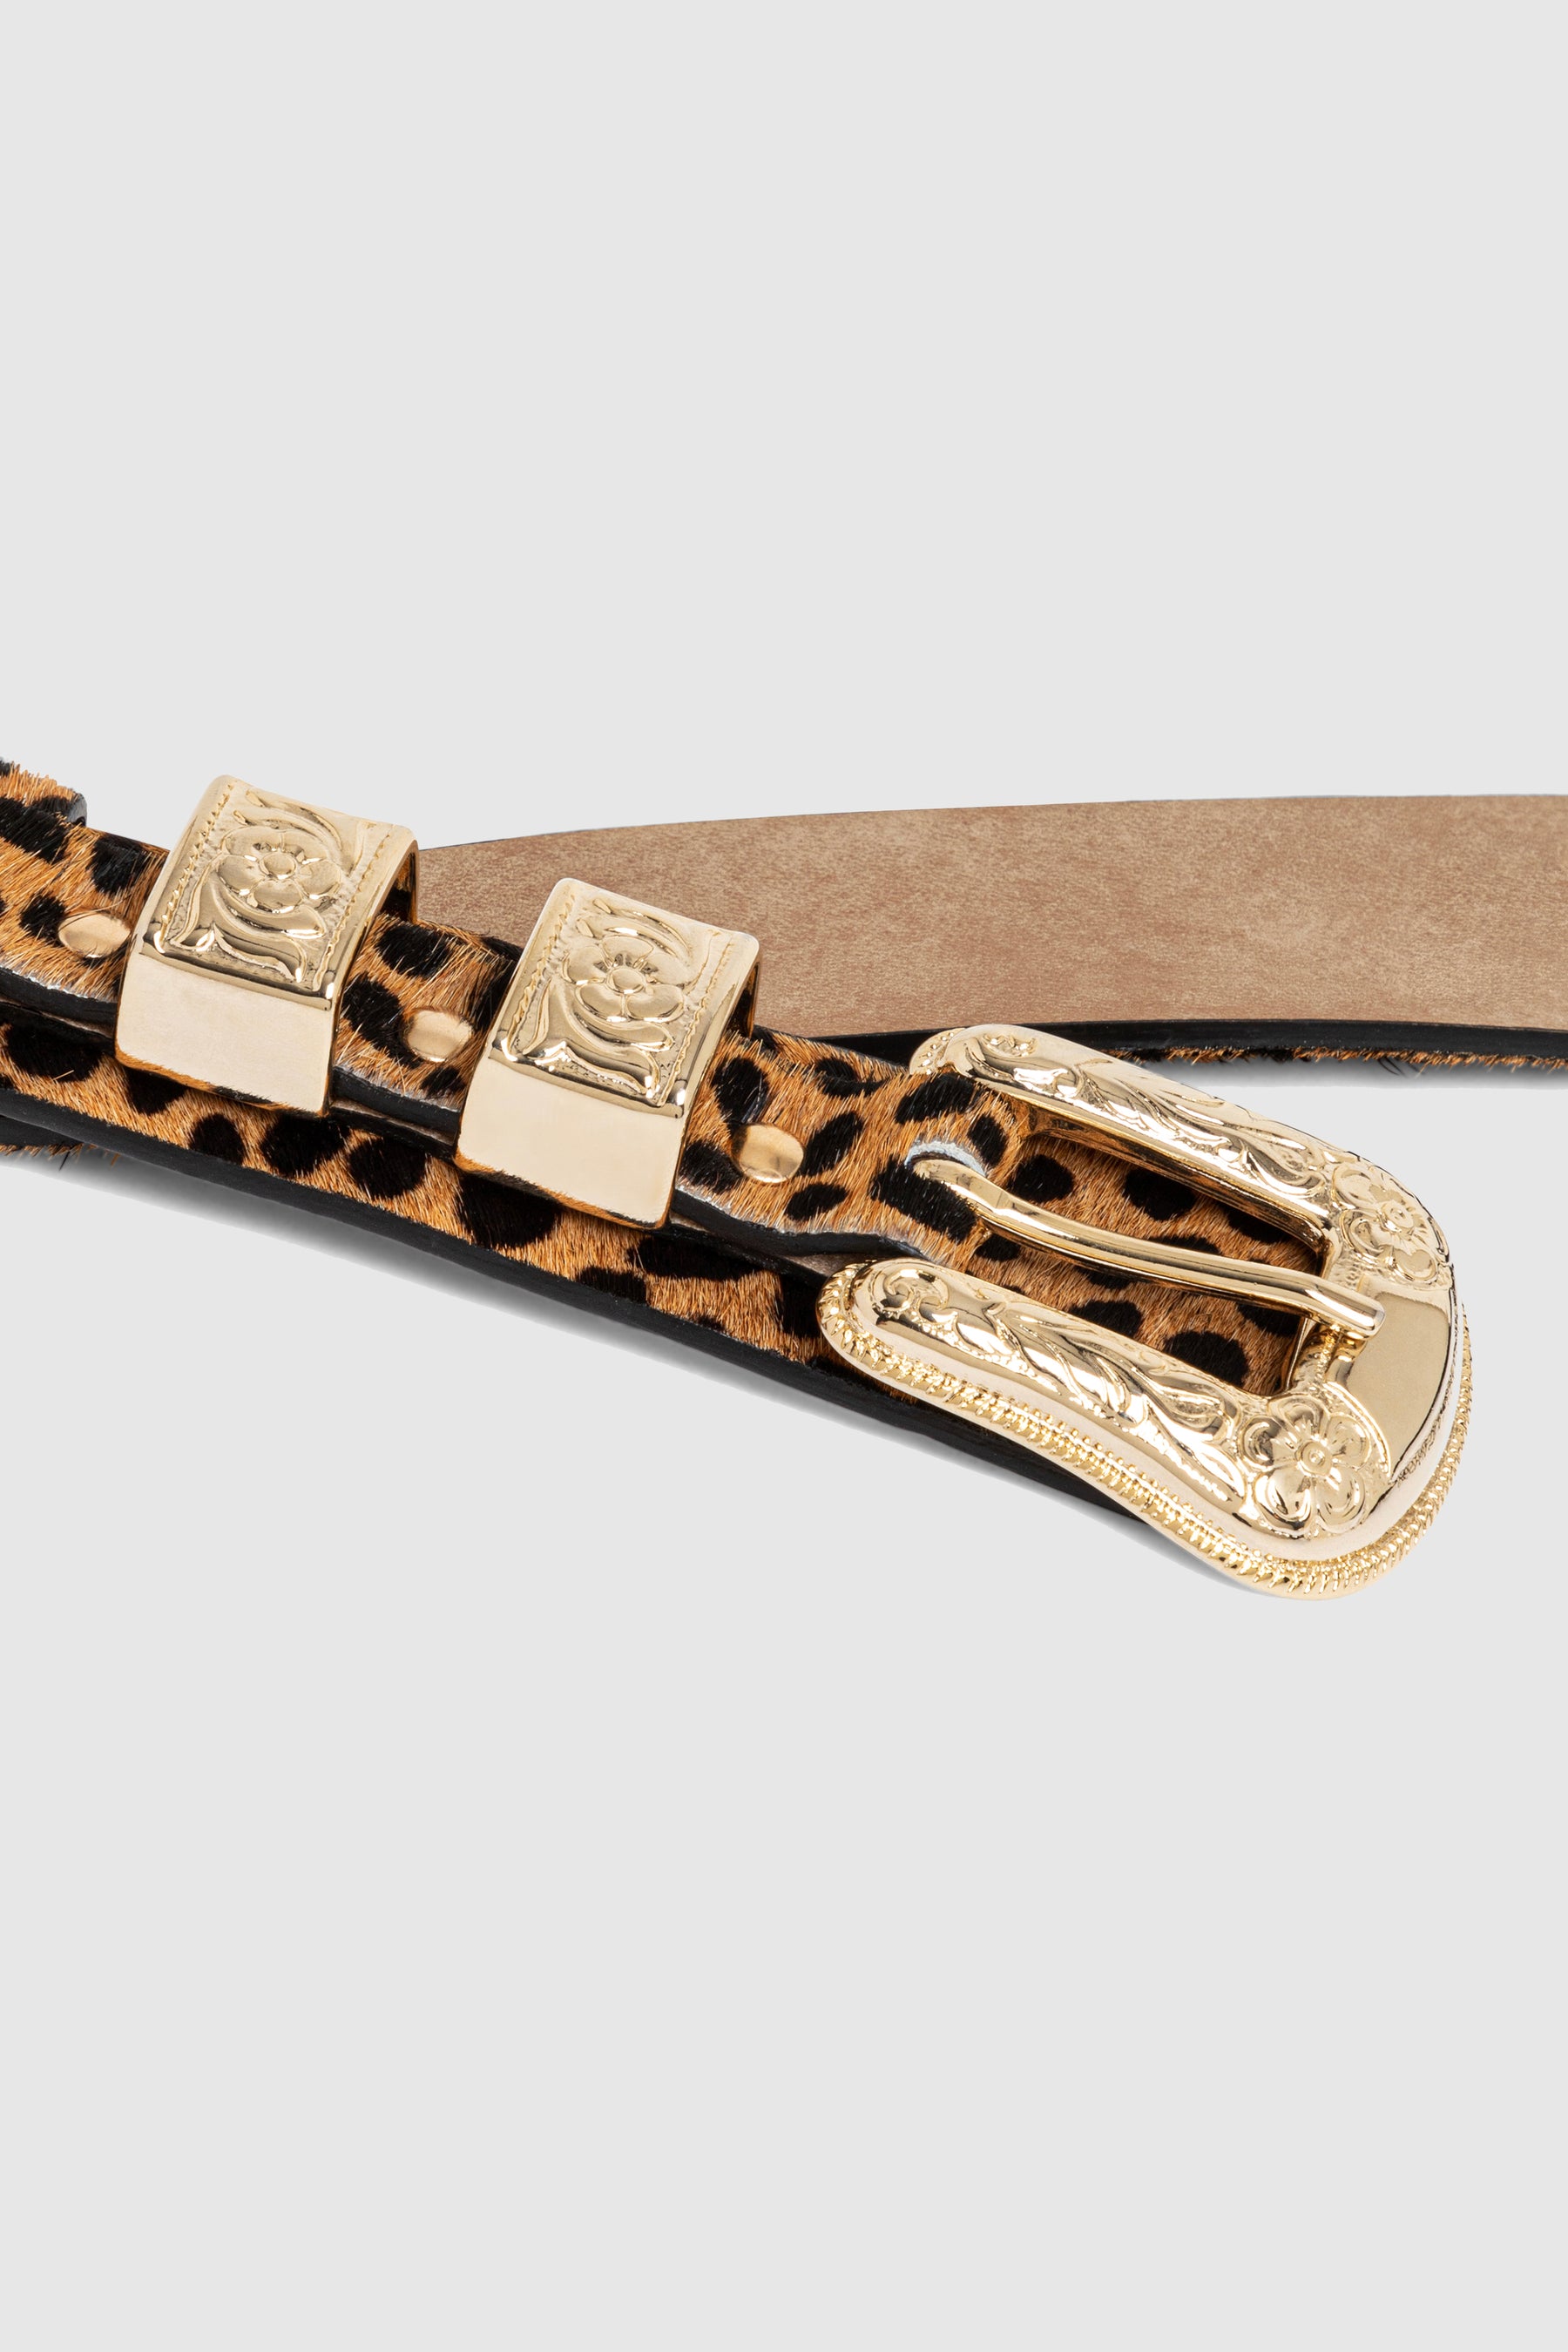 Texan belt in Cheetah printed leather